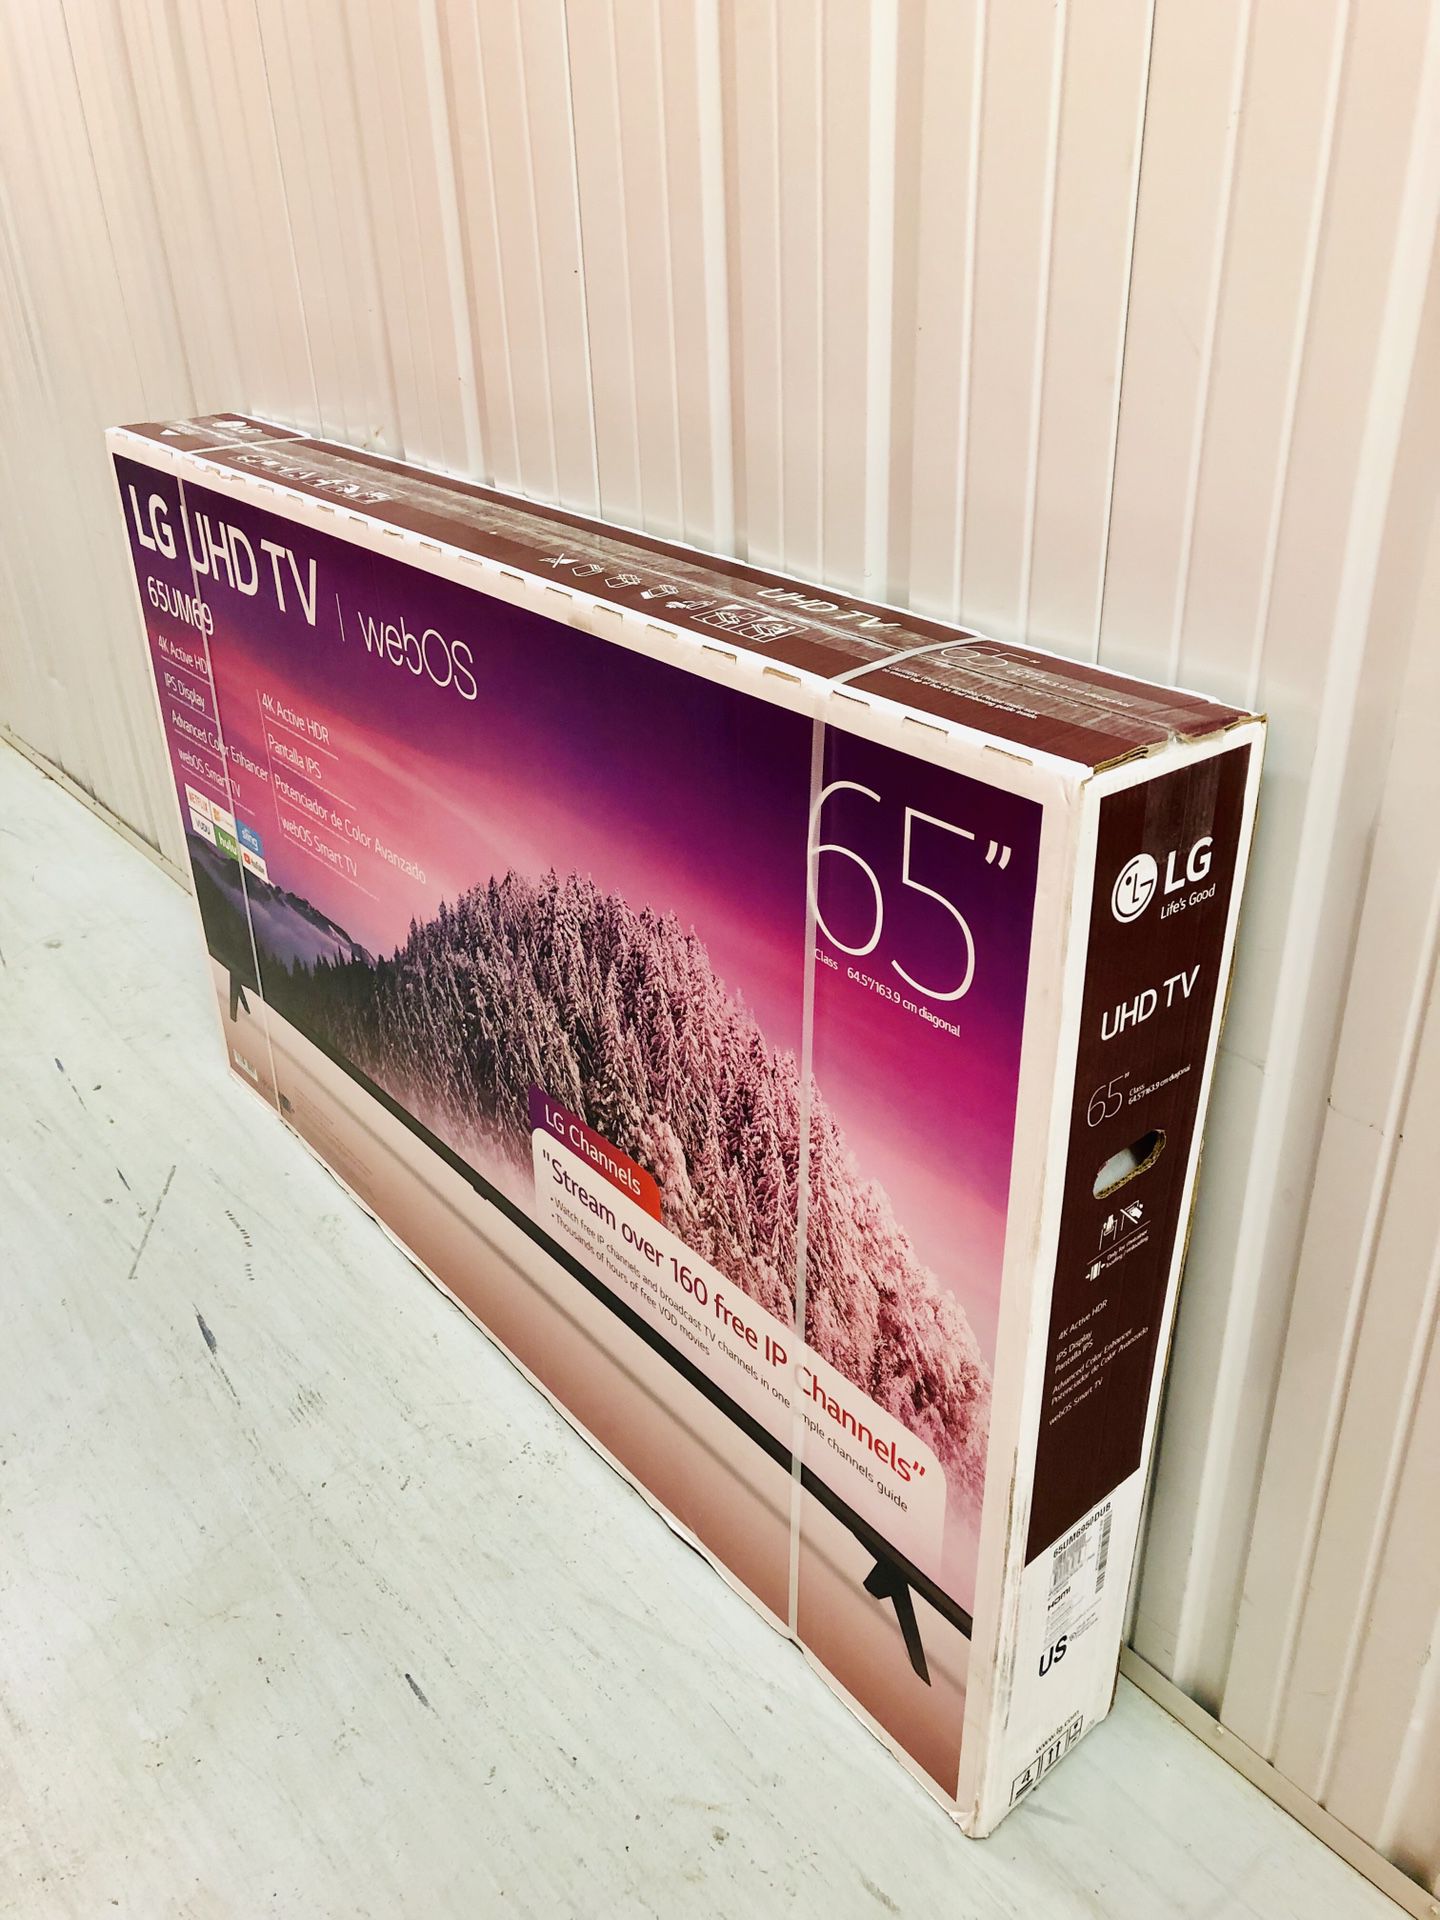 LG 65" Class 4K (2160P) Ultra HD Smart LED HDR TV LG 65UM6950DUB Model 2019 Brand New In Box